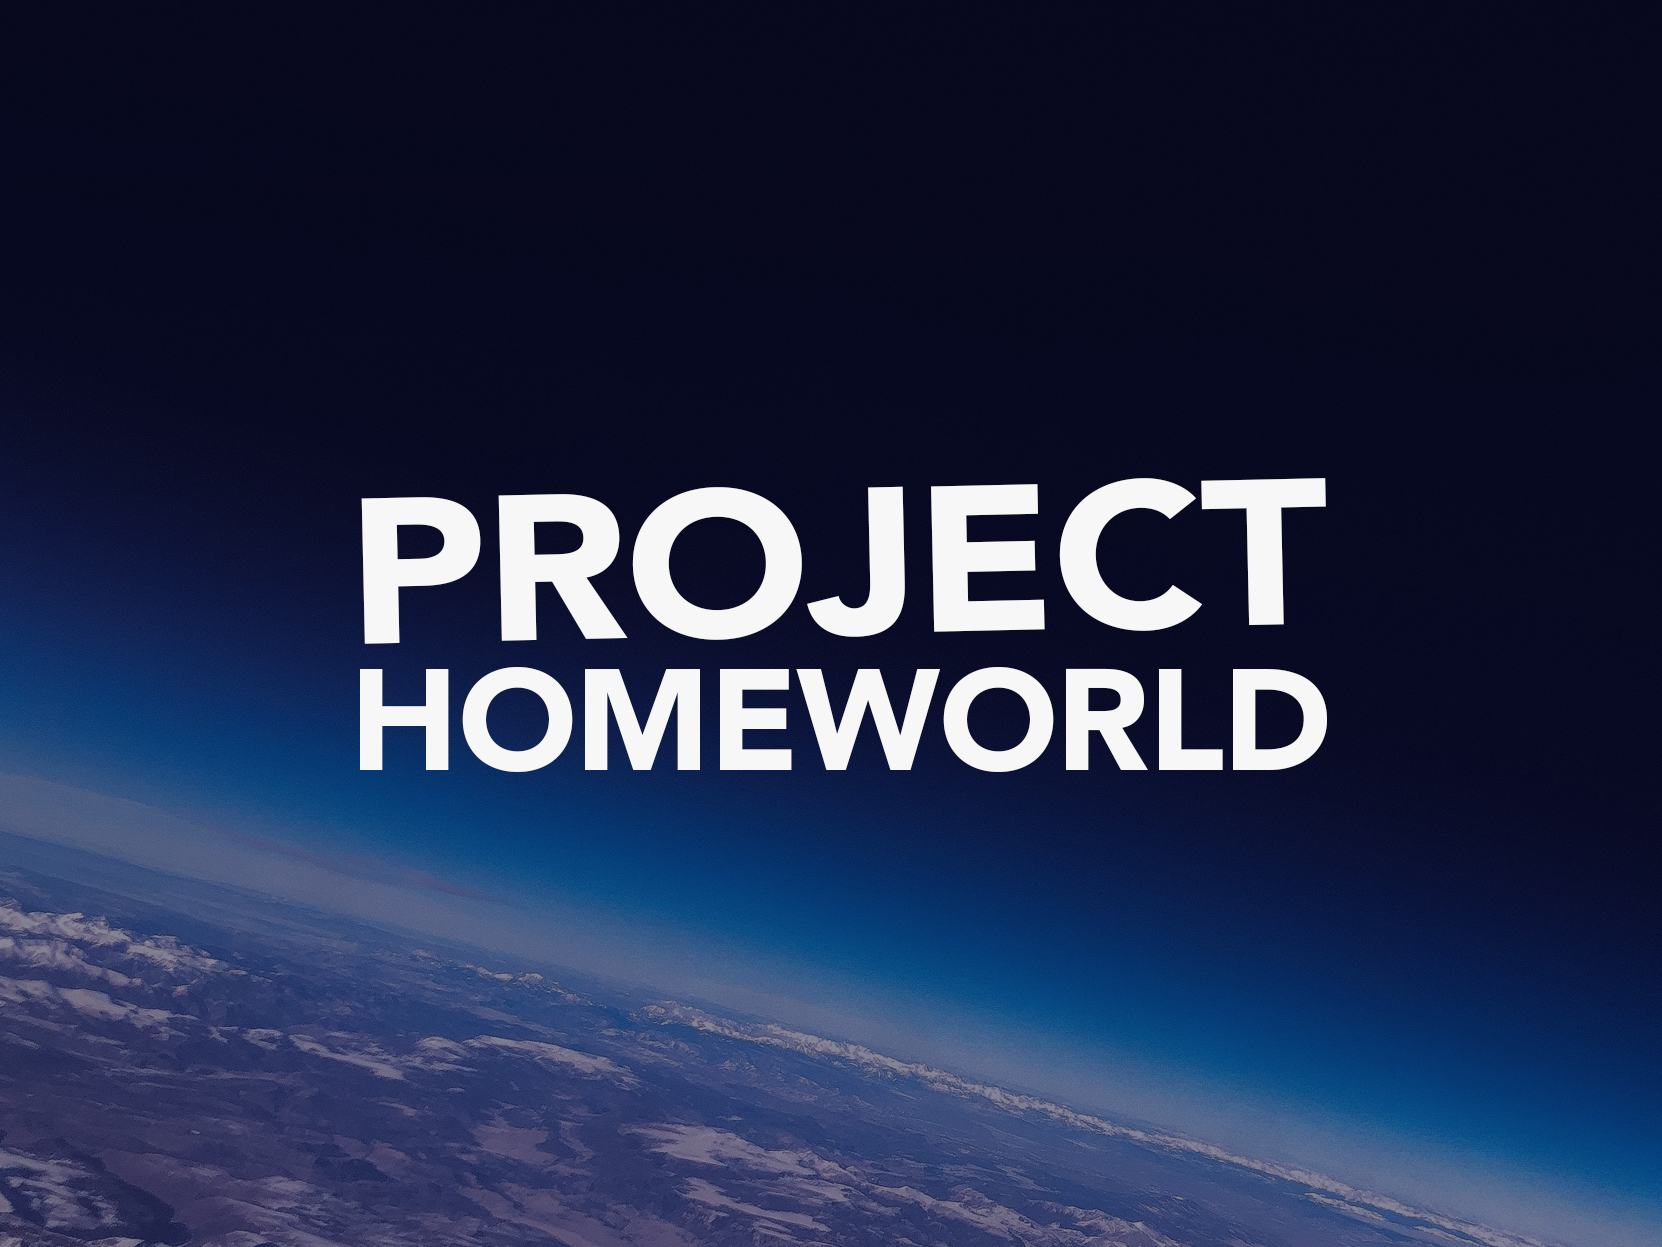 Project Homeworld